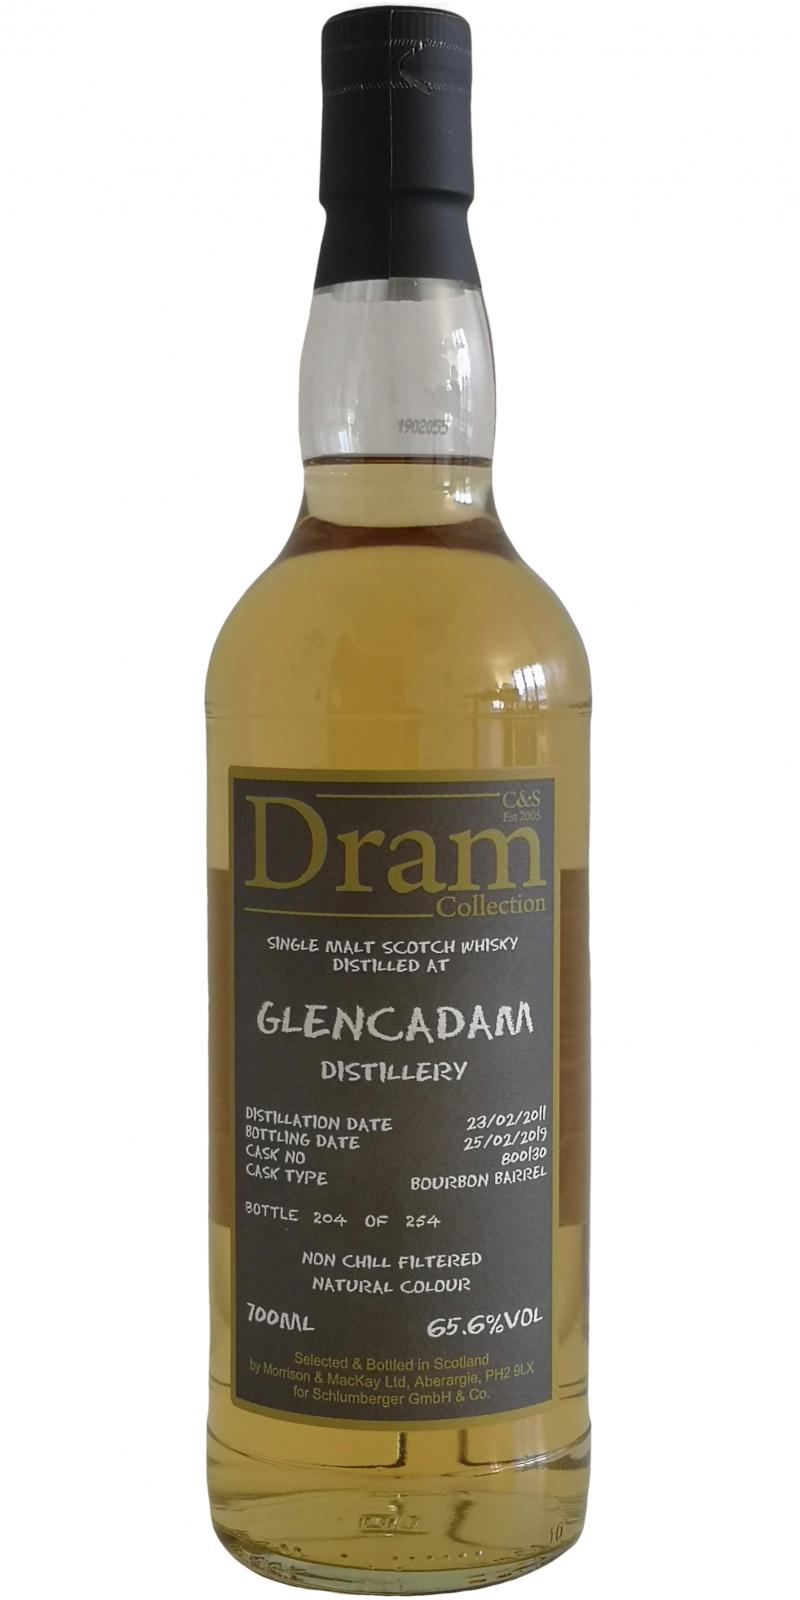 Glencadam 2011 C&S Dram Collection Bourbon Barrel #800130 65.6% 700ml